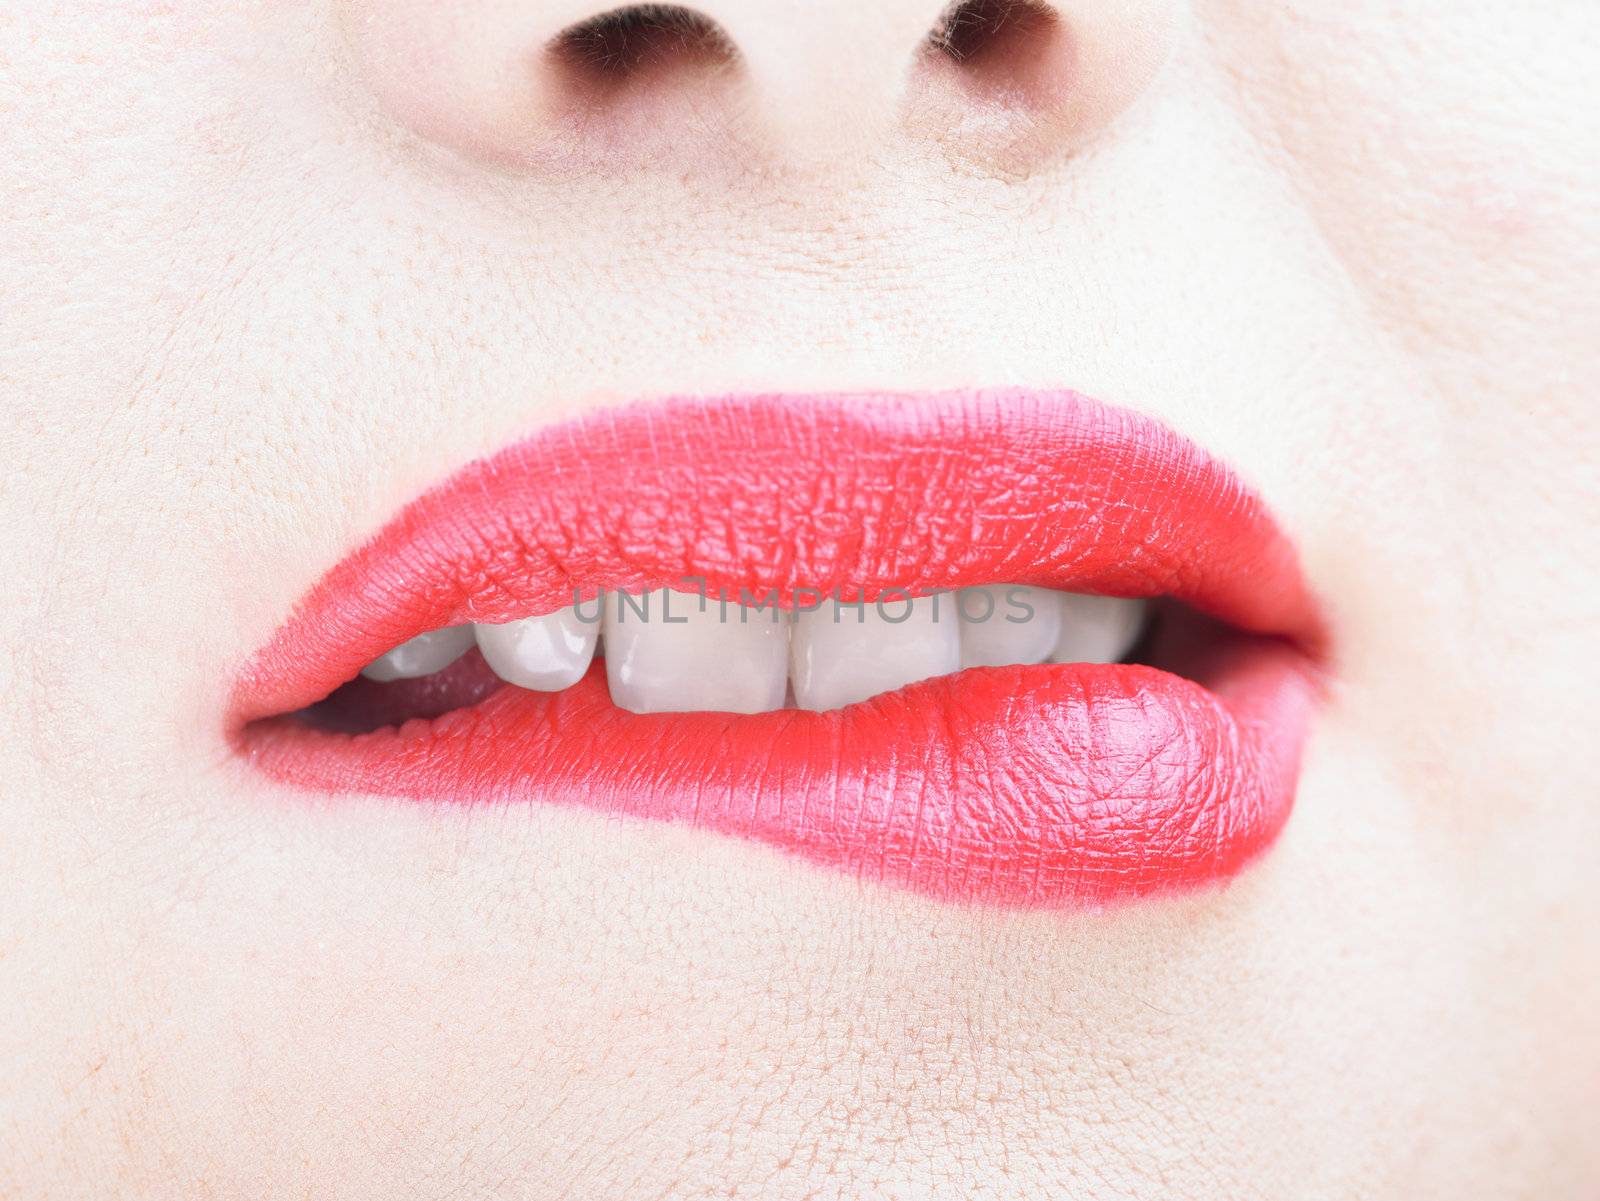 Teeth Biting Sensual Red Lips with great makeup, bit lip